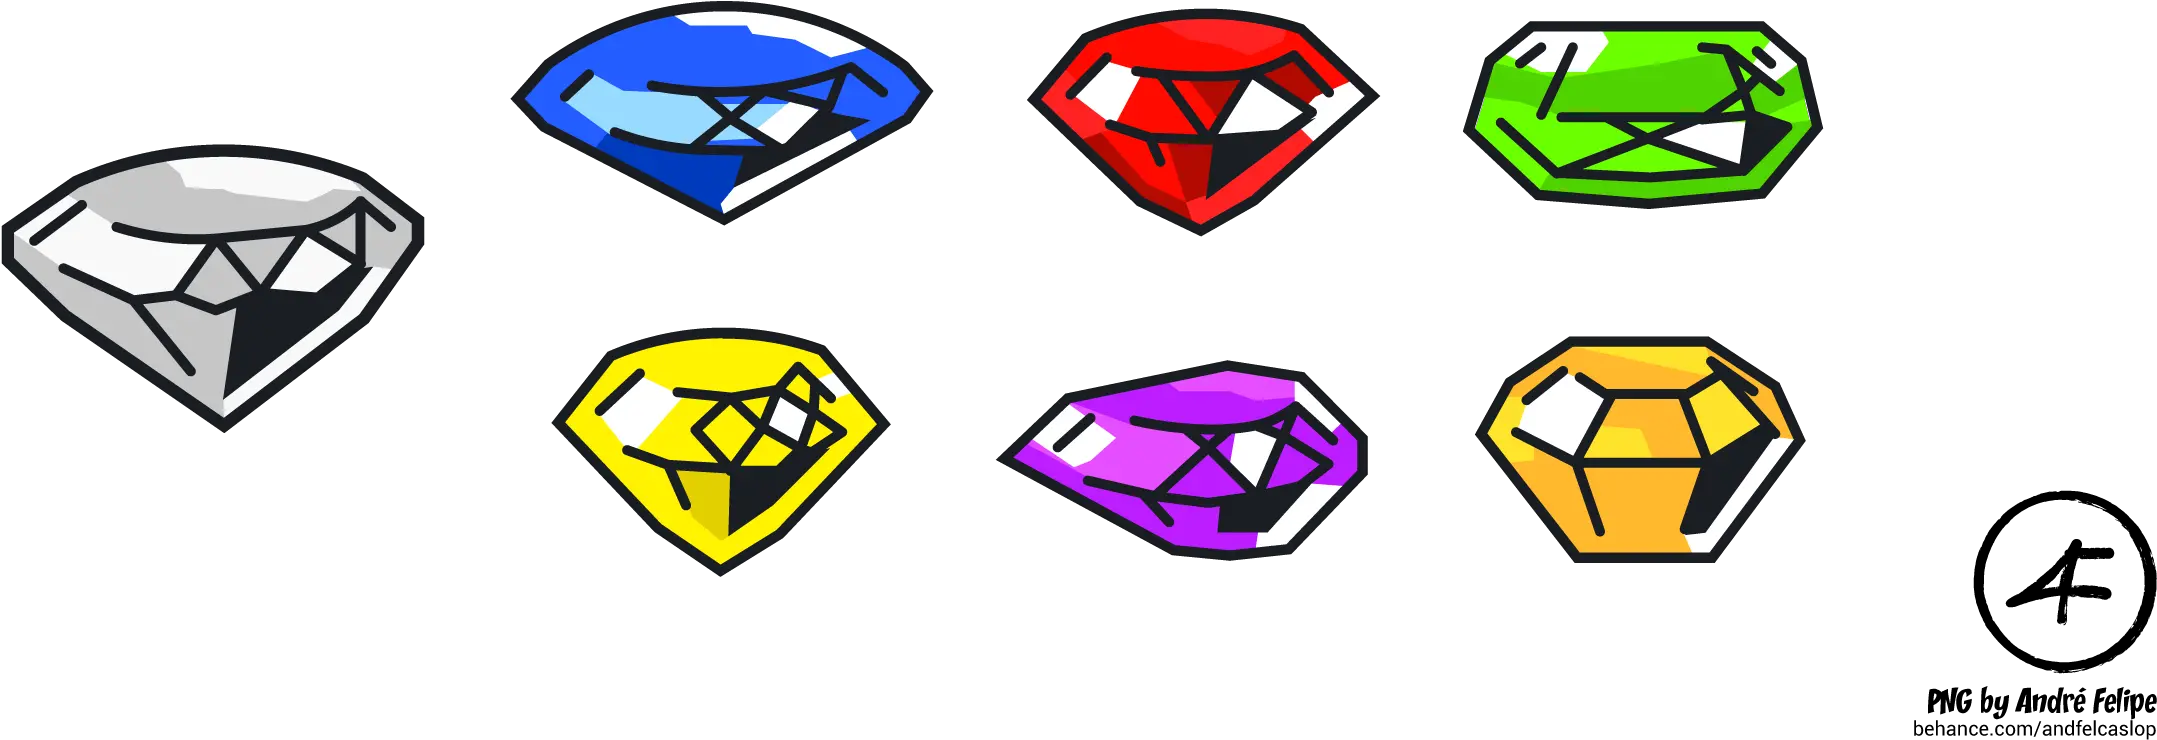 Download 934 Views Crash Bandicoot Gem Icon Png Image With Crash Bandicoot Items Jewel Icon